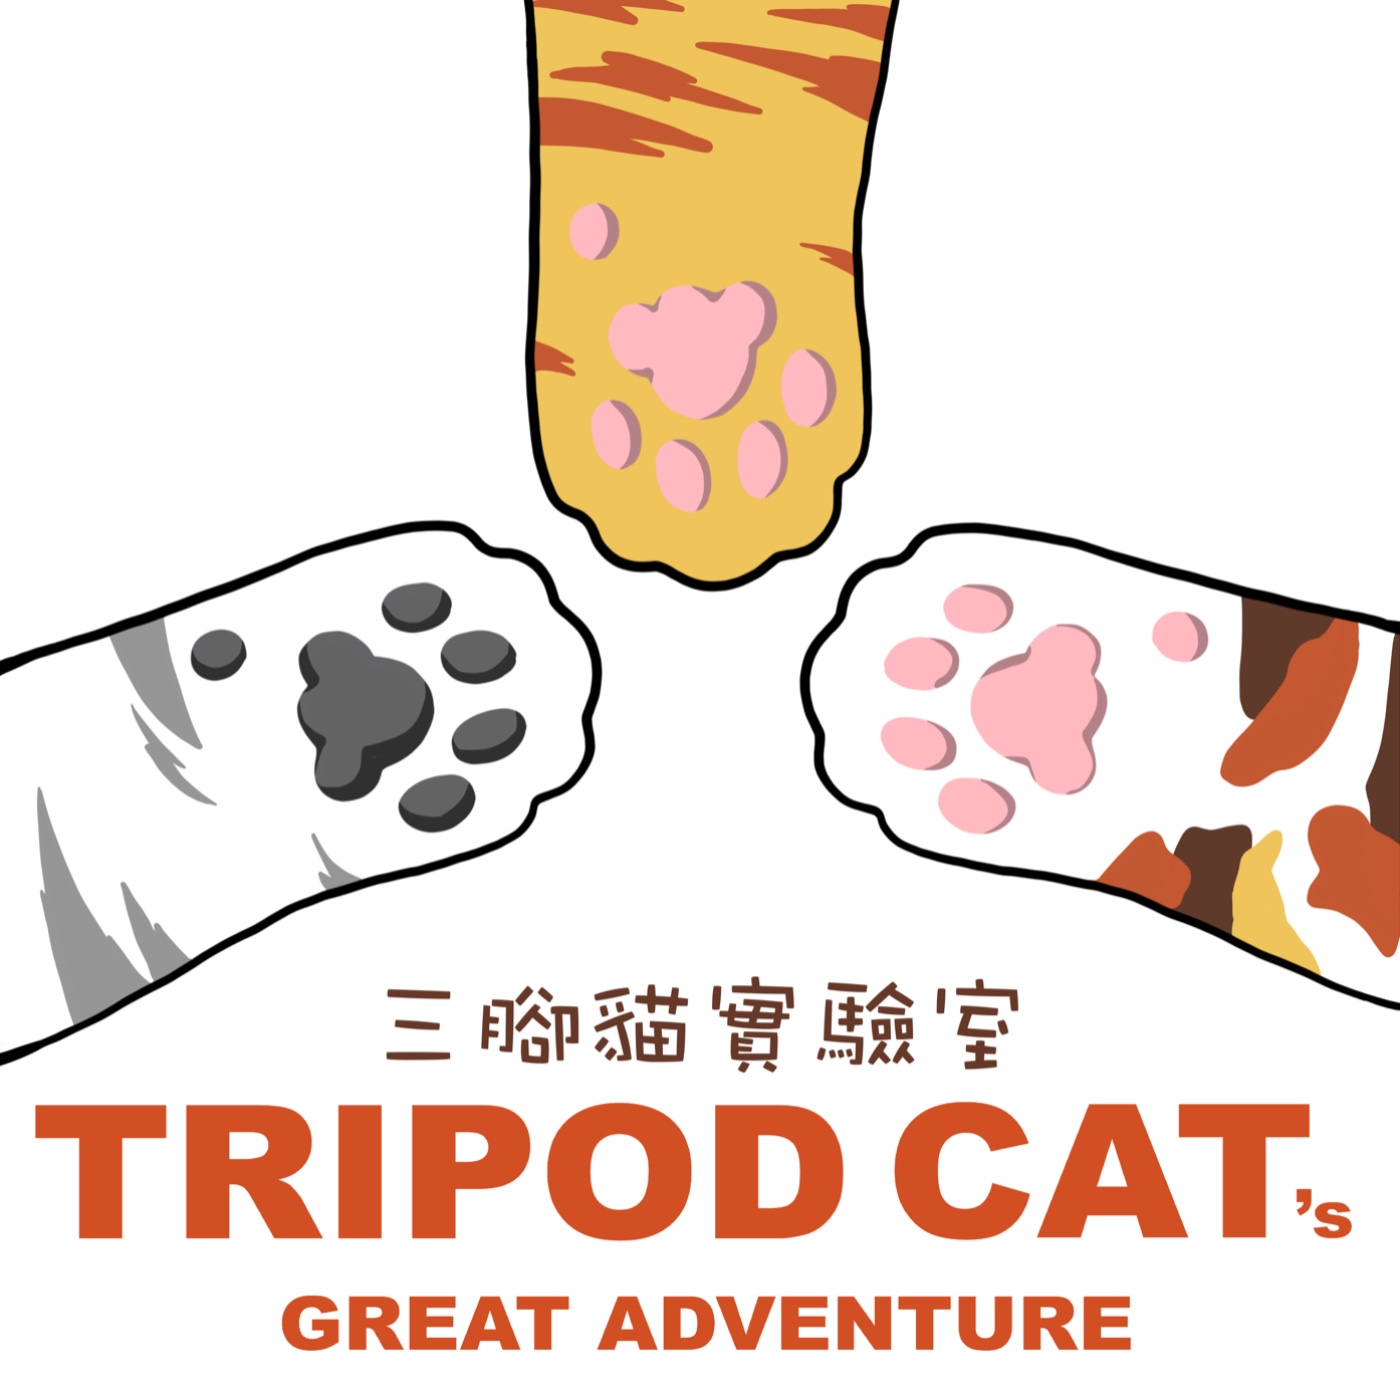 Tripod Cat's Great Adventure